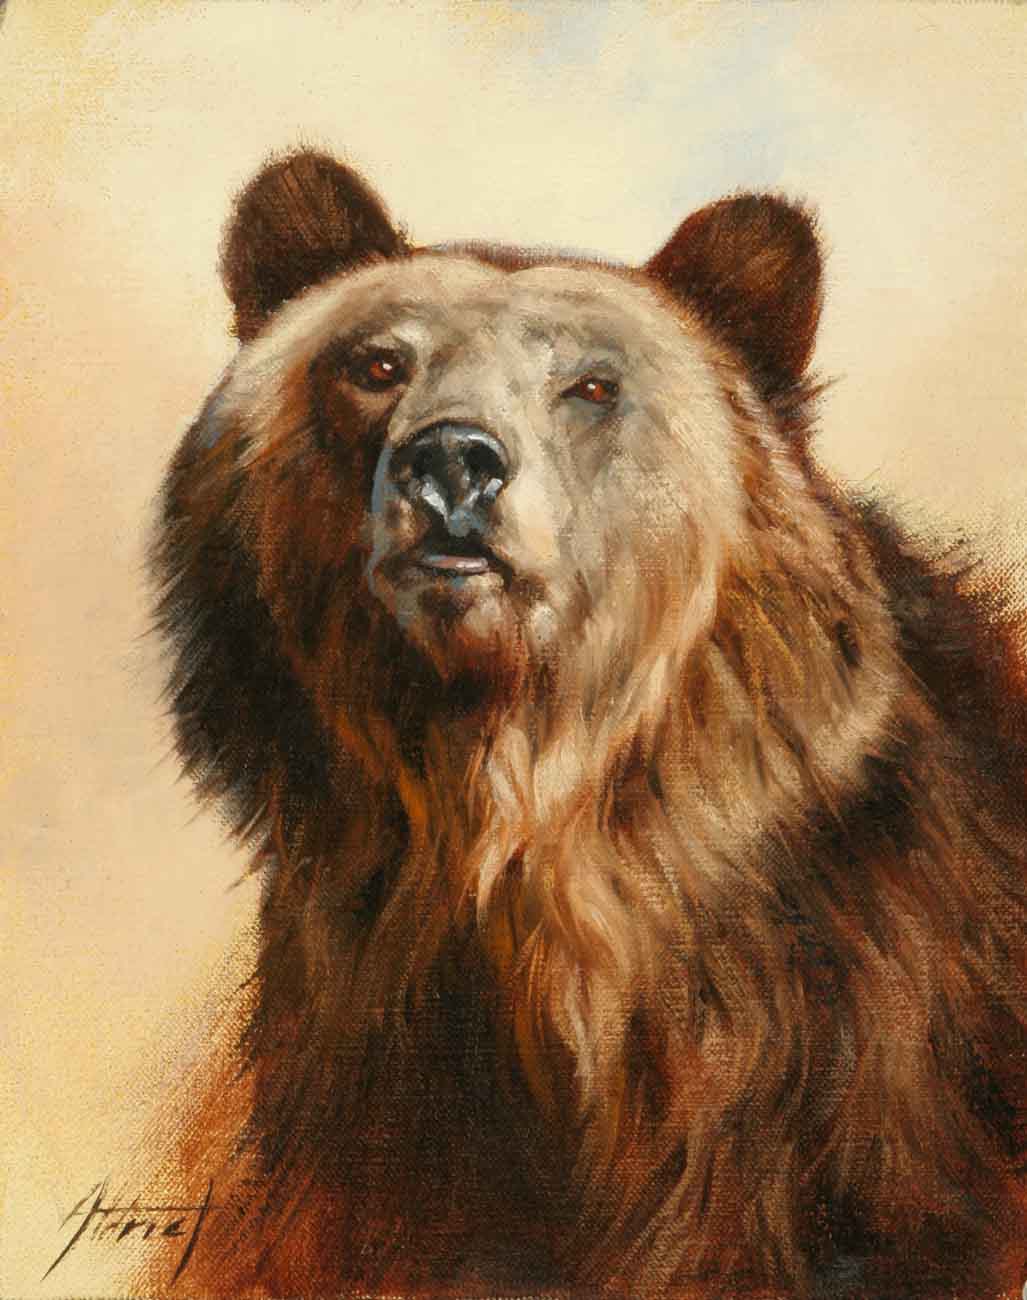 Grizzly Portrait-Painting-Edward Aldrich-Sorrel Sky Gallery